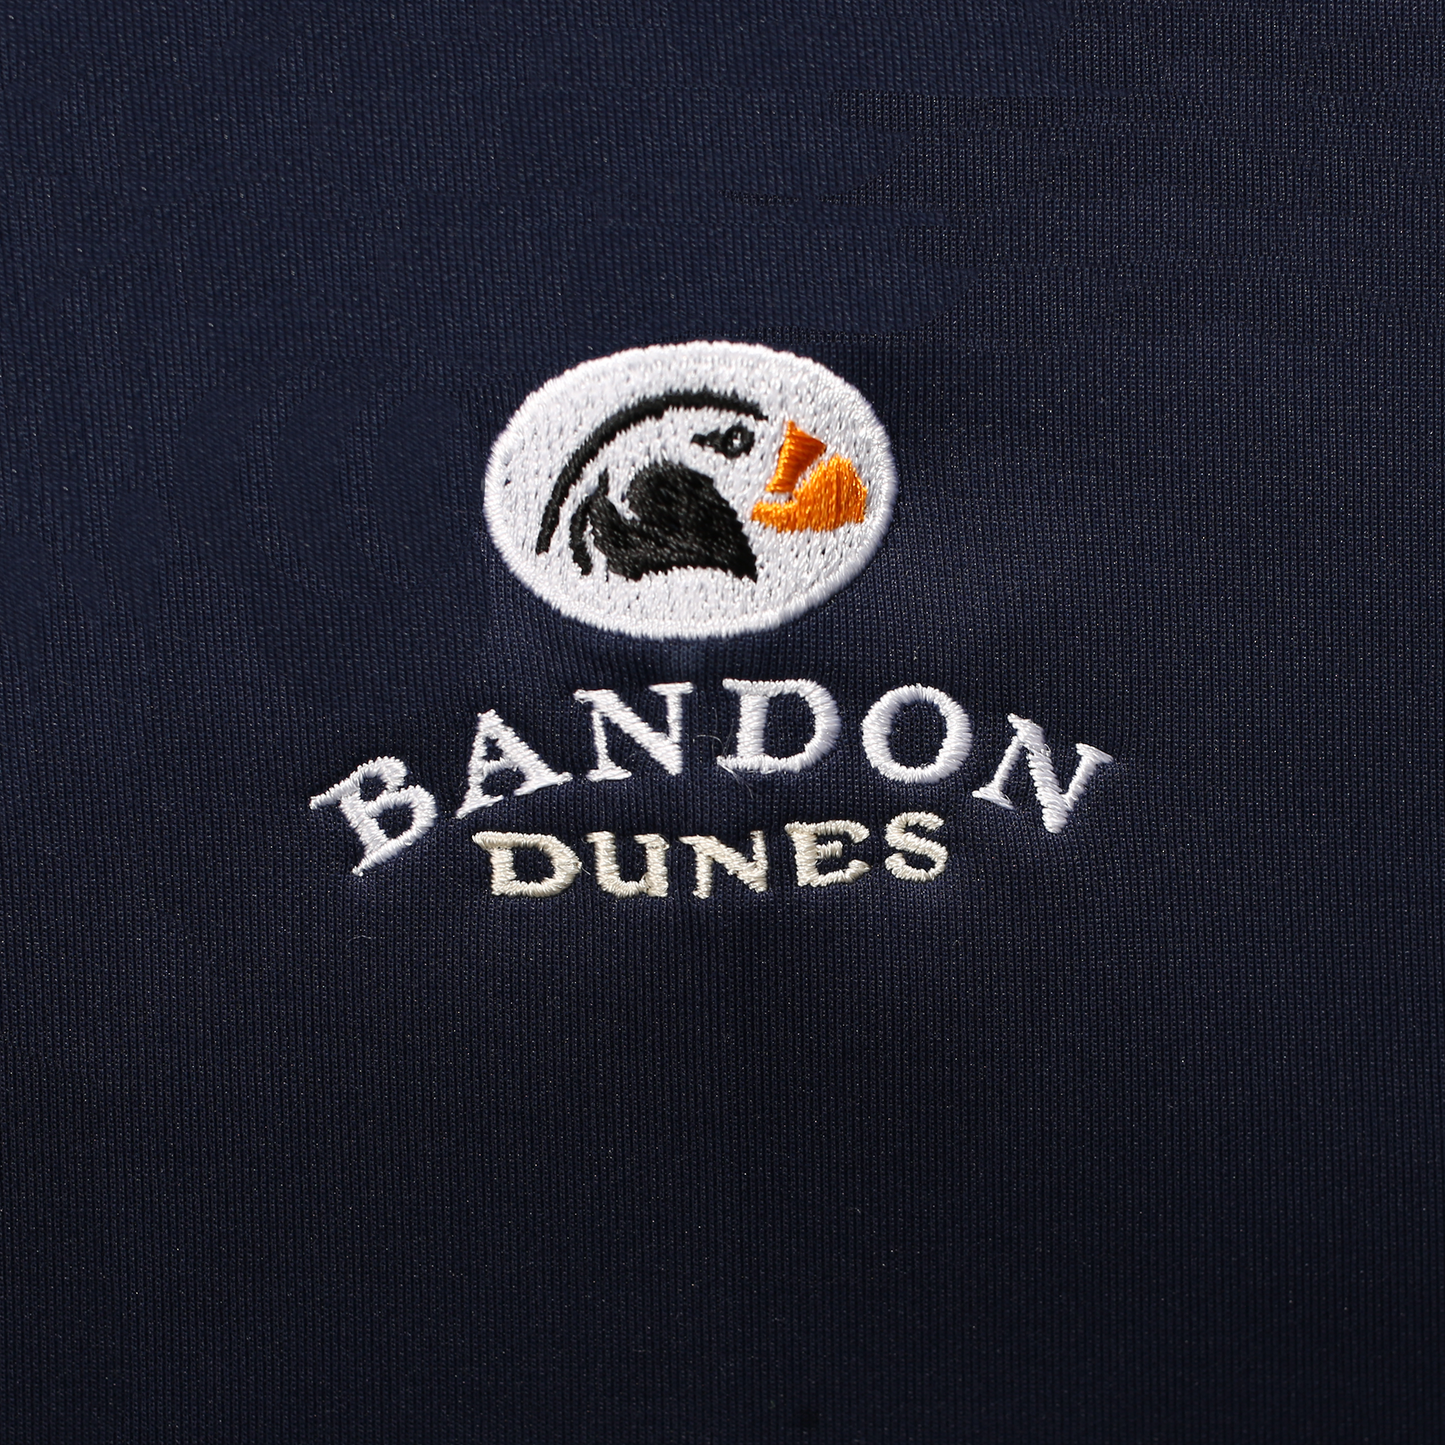 Hamilton Thermal Hooded Jacket - Bandon Dunes